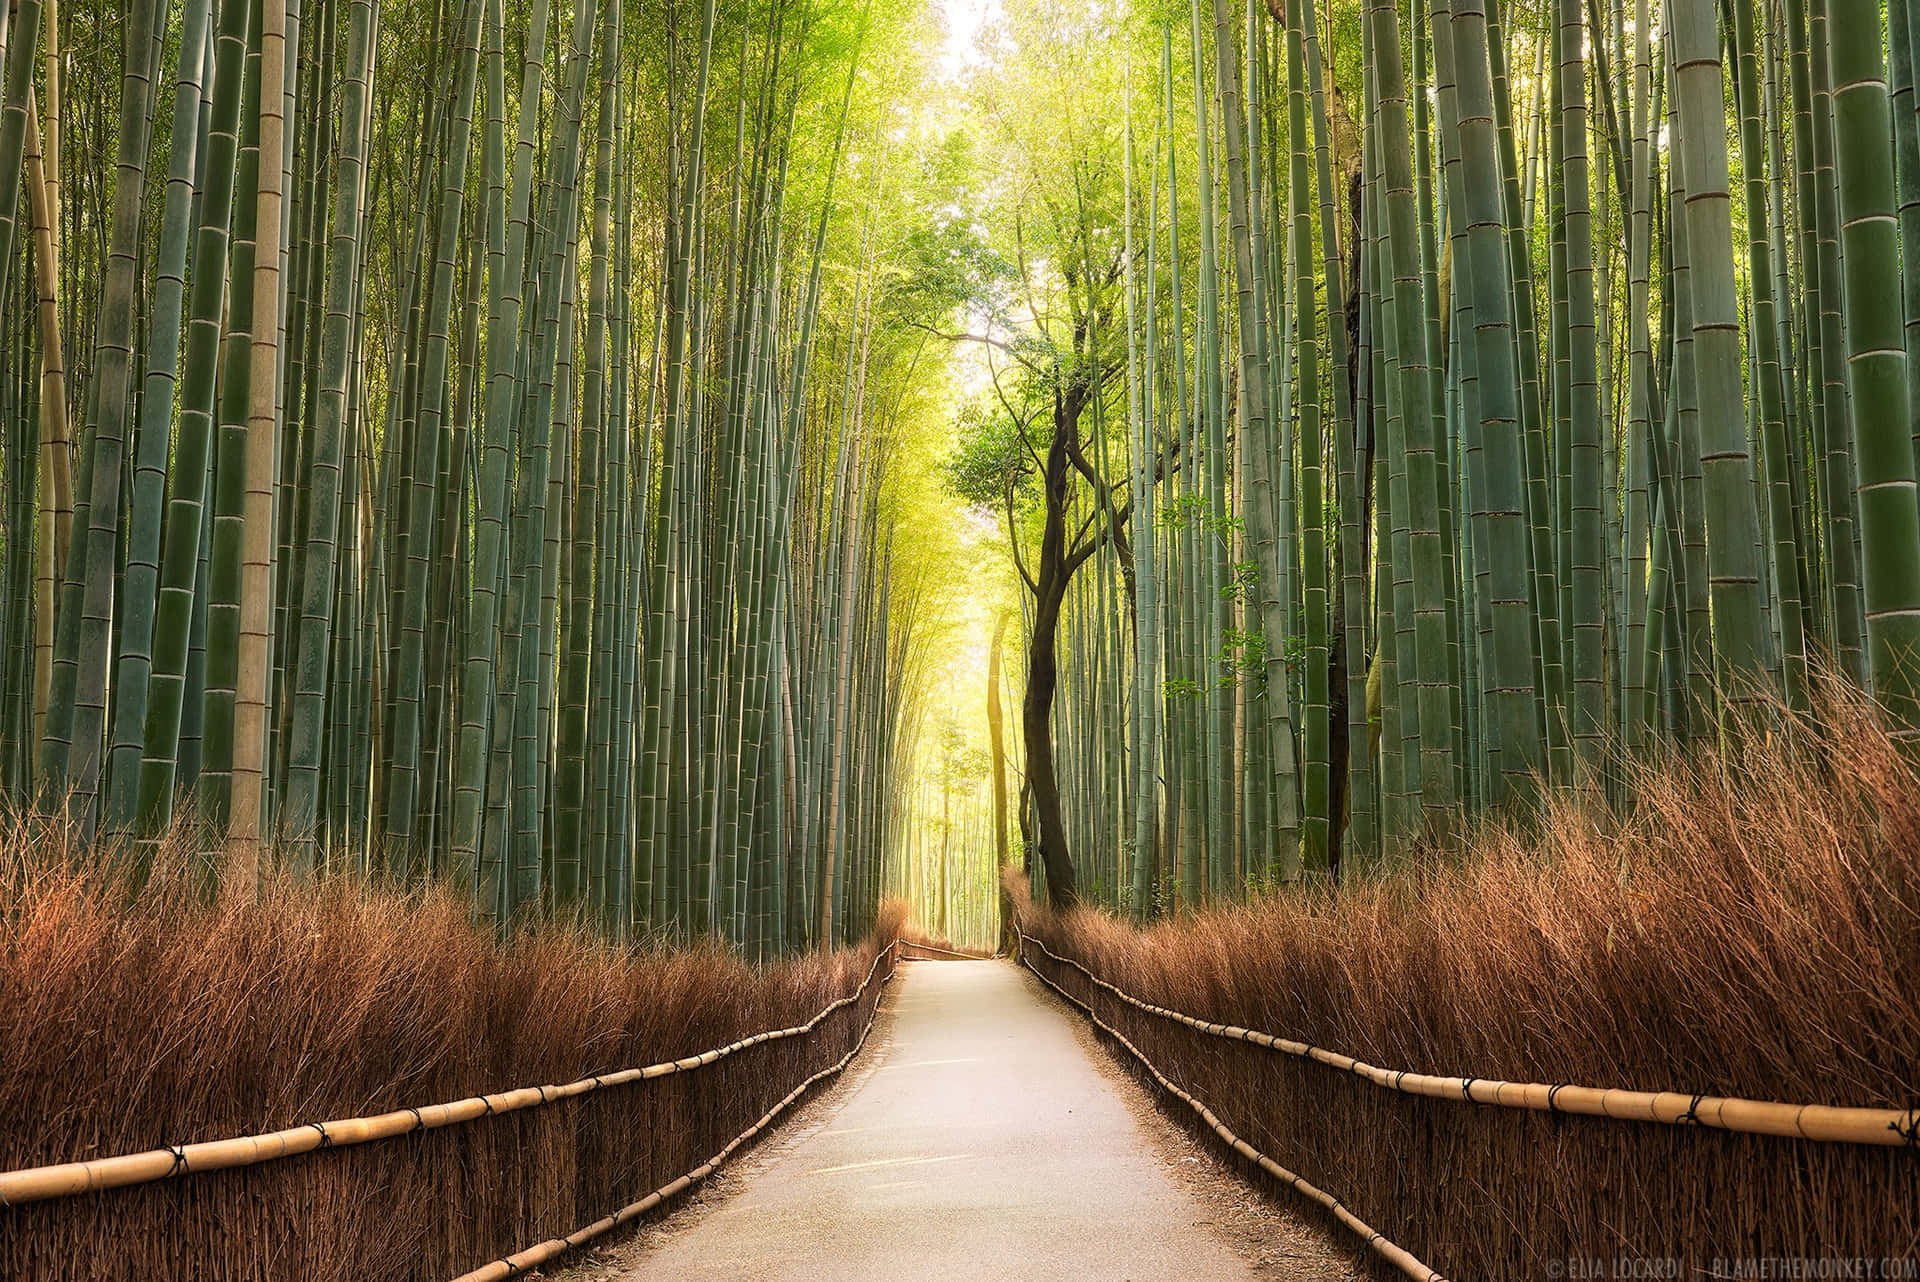 Fondods De Bosque De Bambú